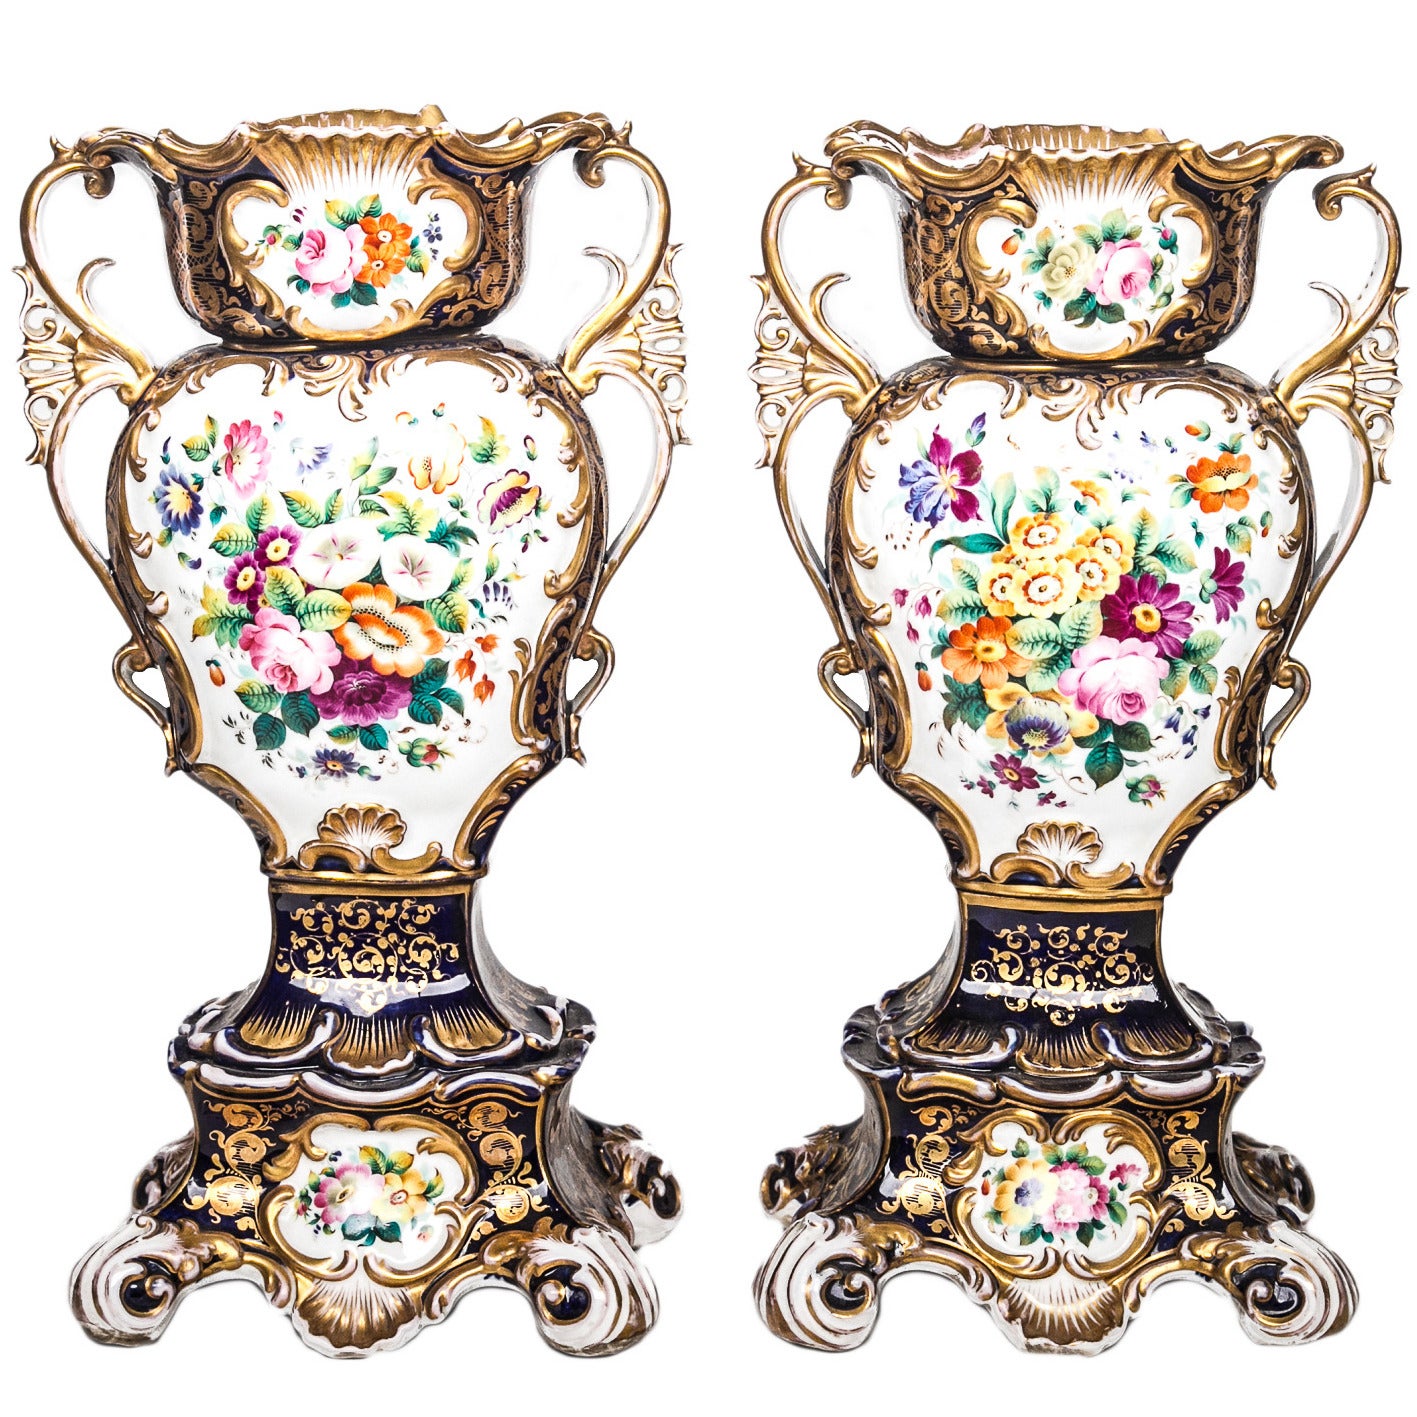 Pair of Old Paris Porcelain Hand-Painted Urns